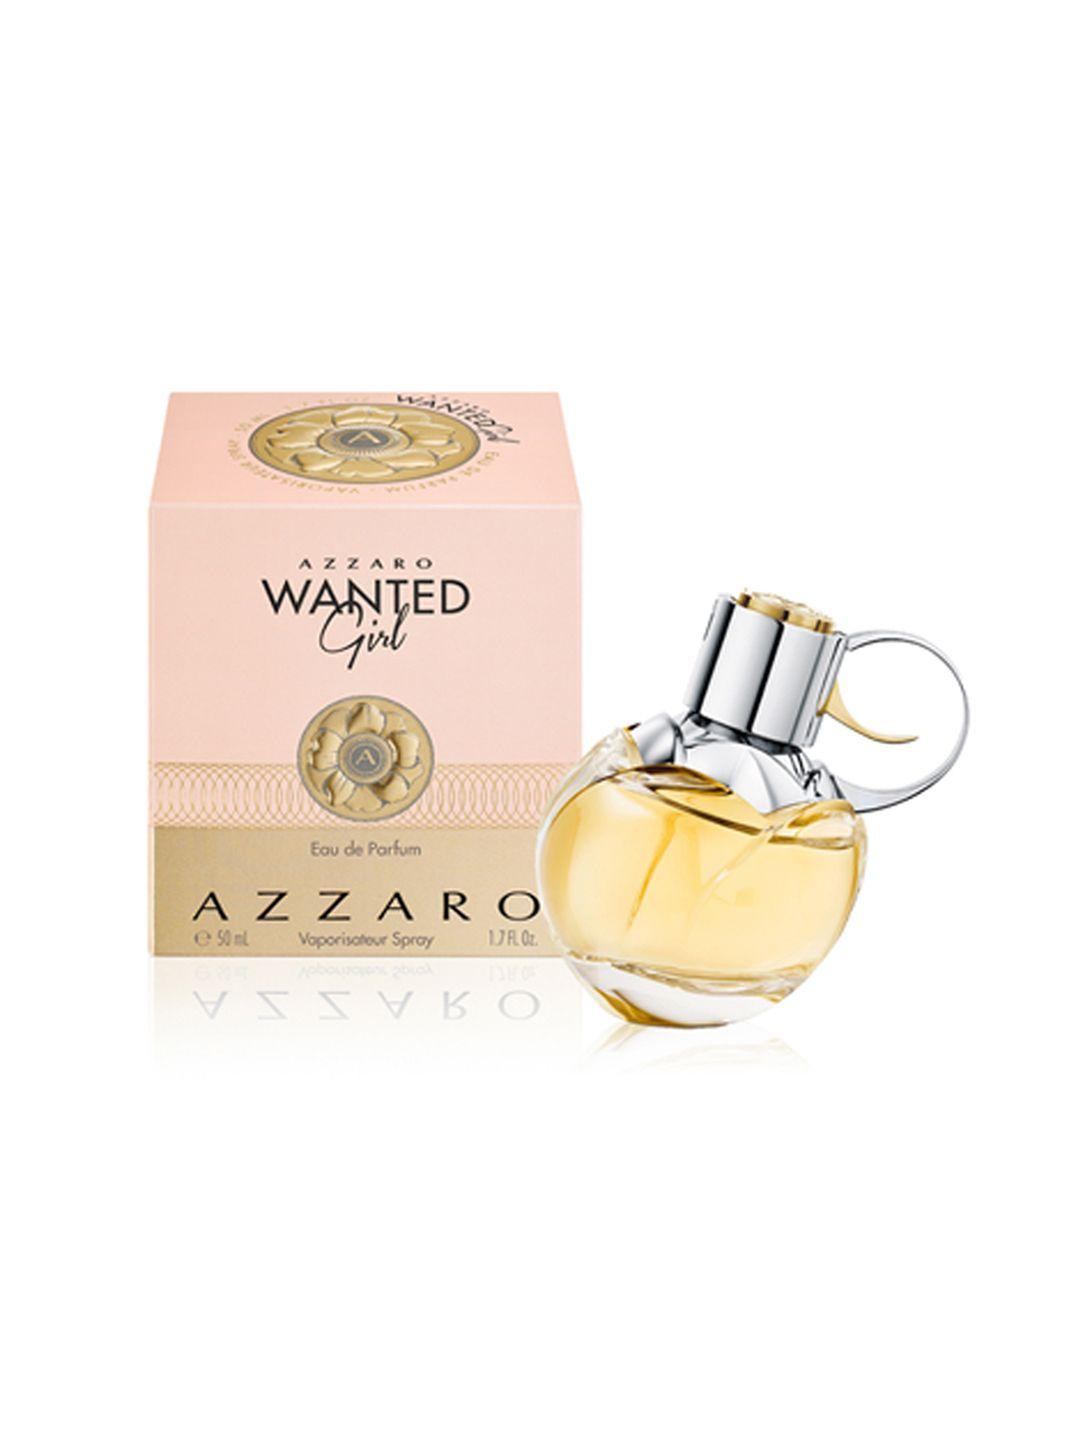 azzaro women wanted girl eau de parfum spray - 50ml